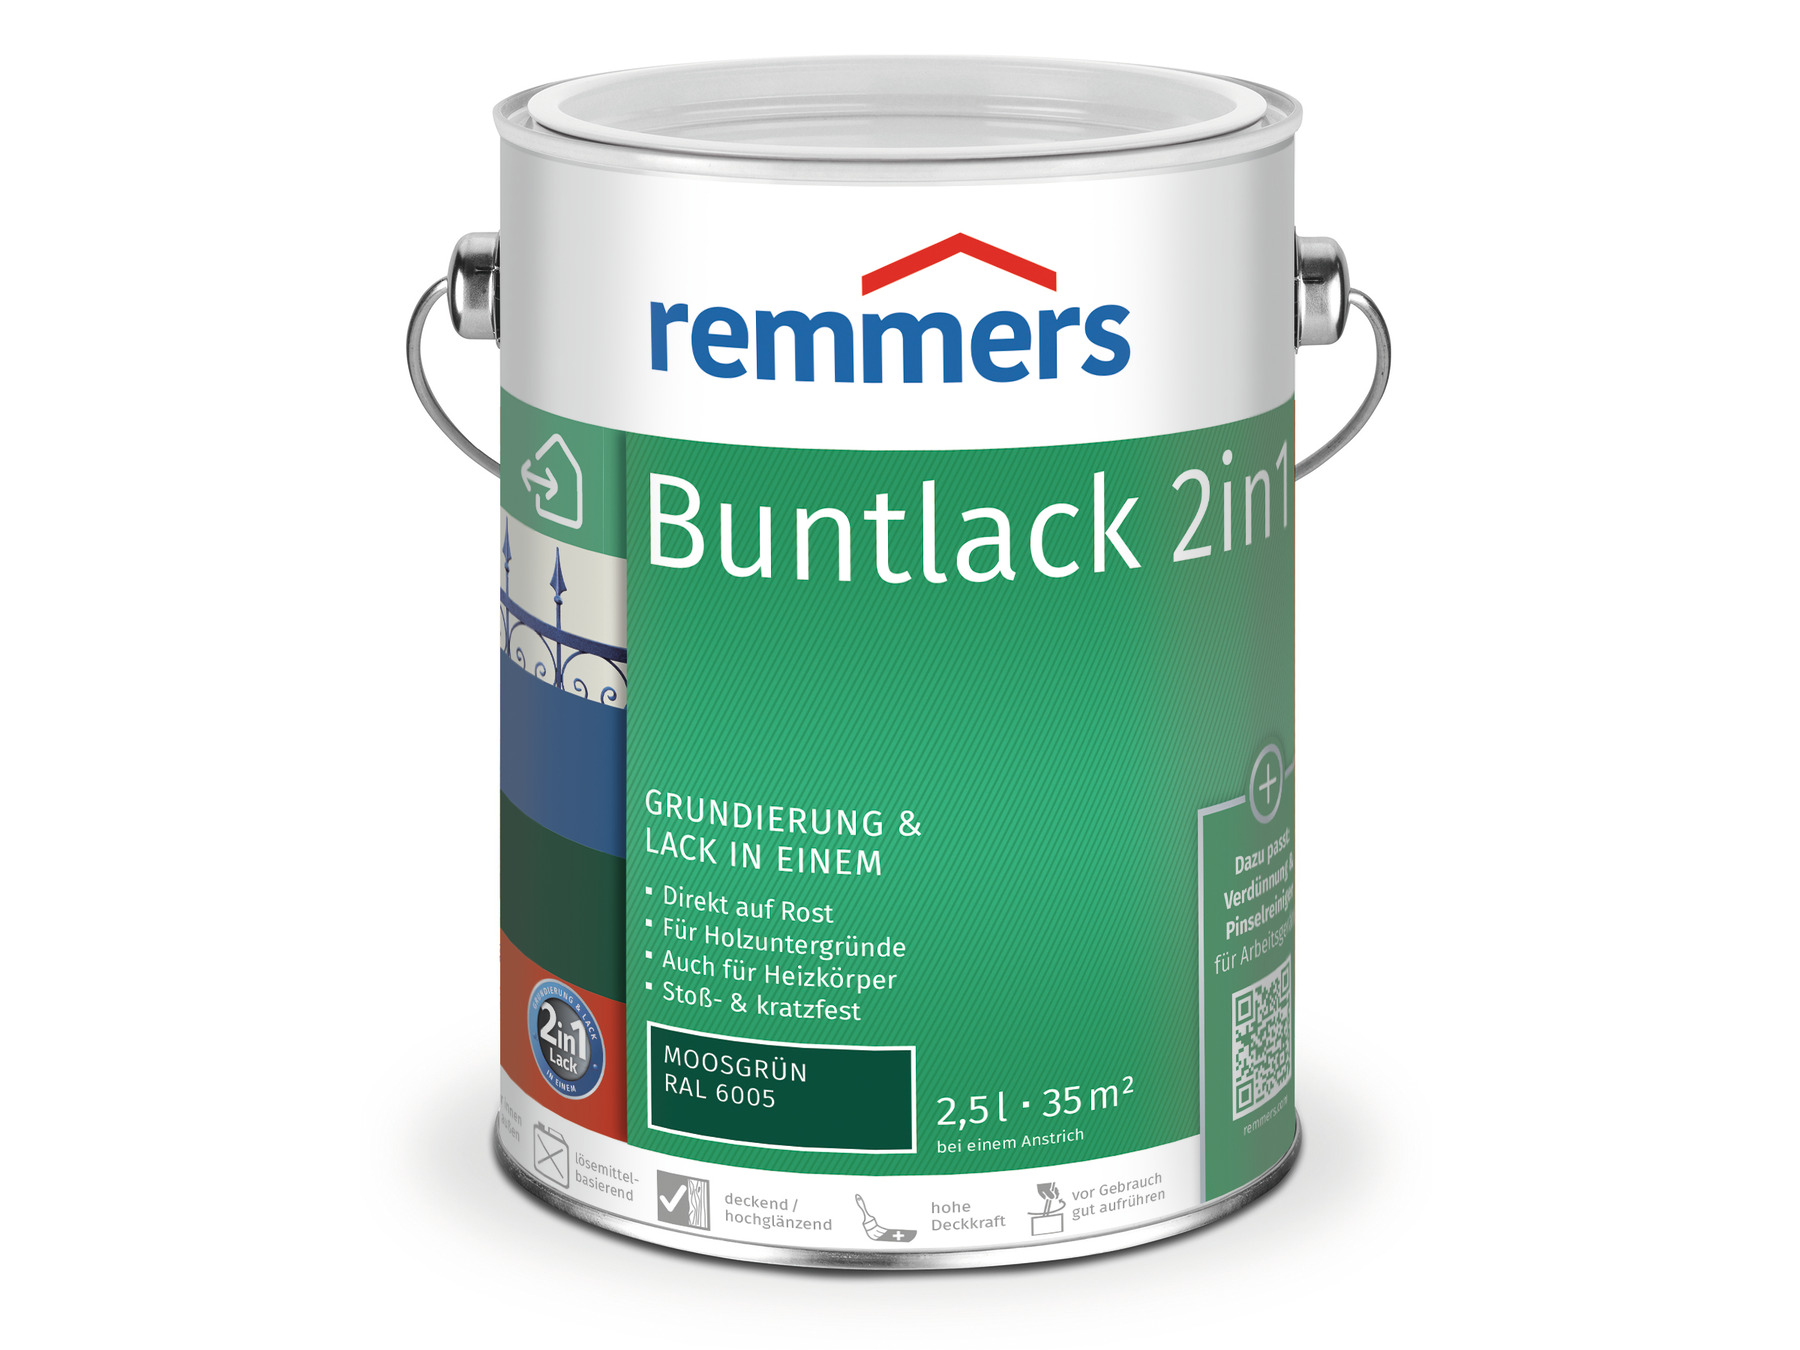 Remmers GmbH Buntlack 2in1